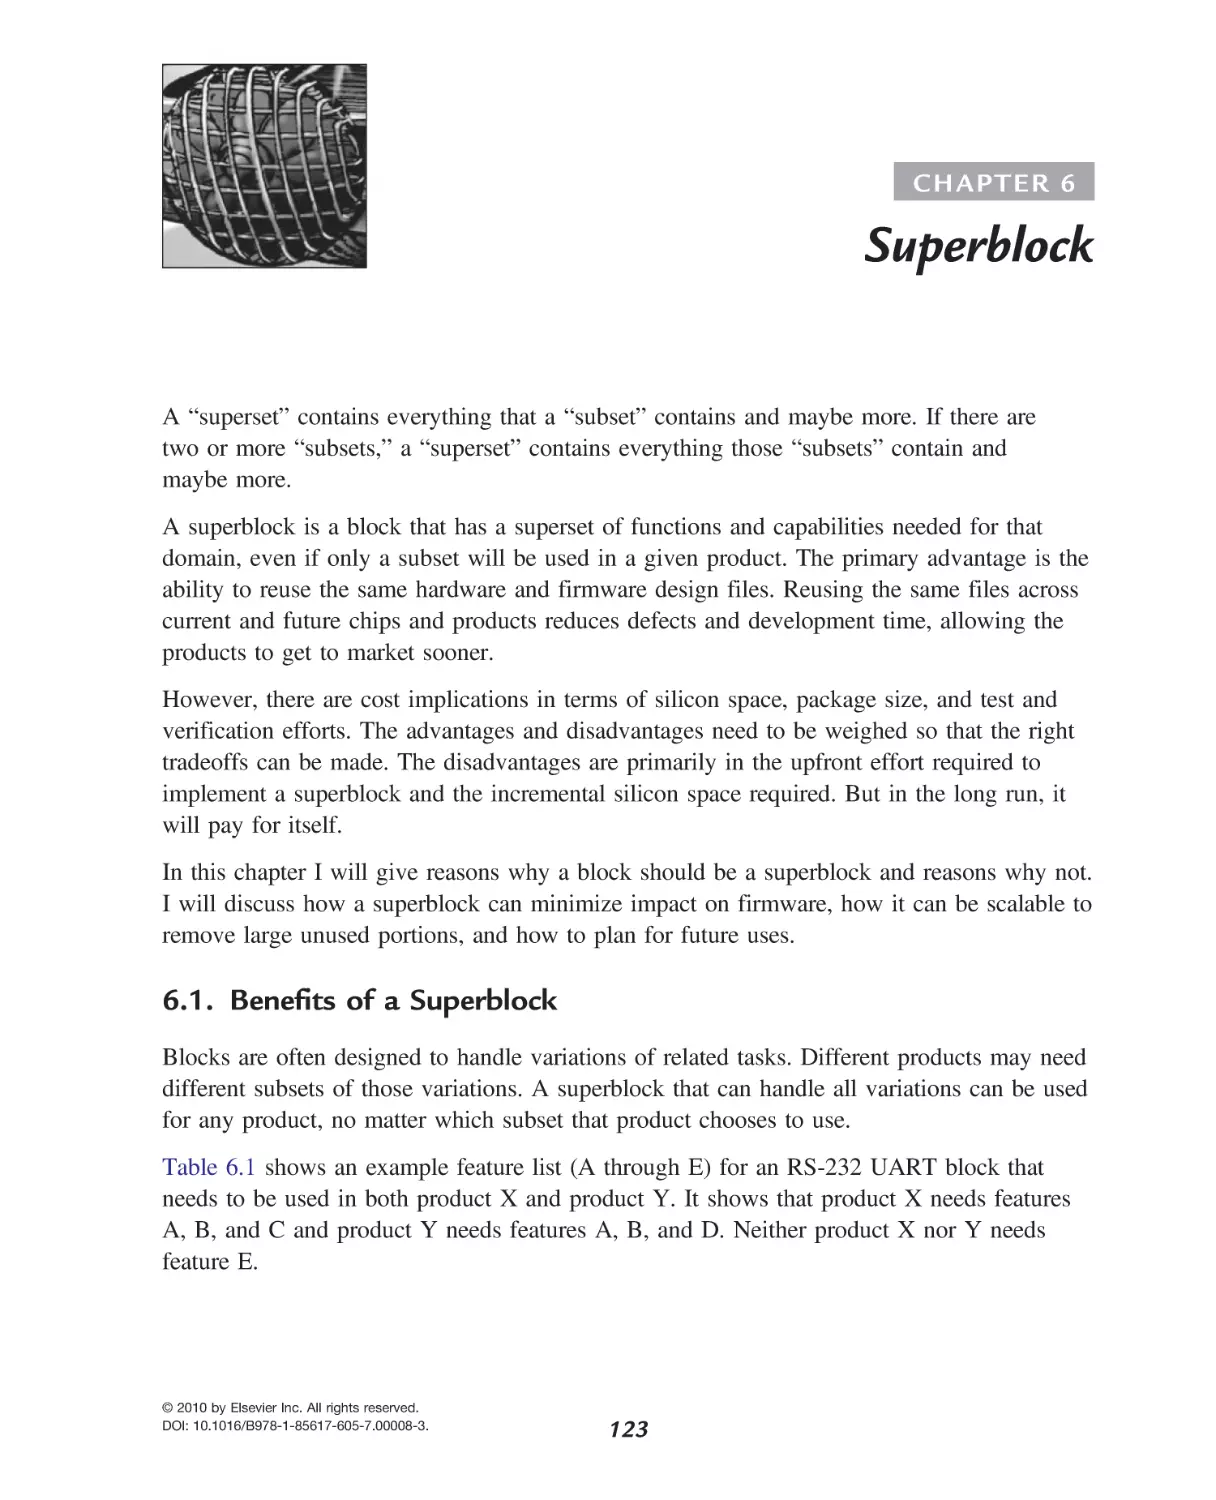 6 Superblock
Benefits of a Superblock